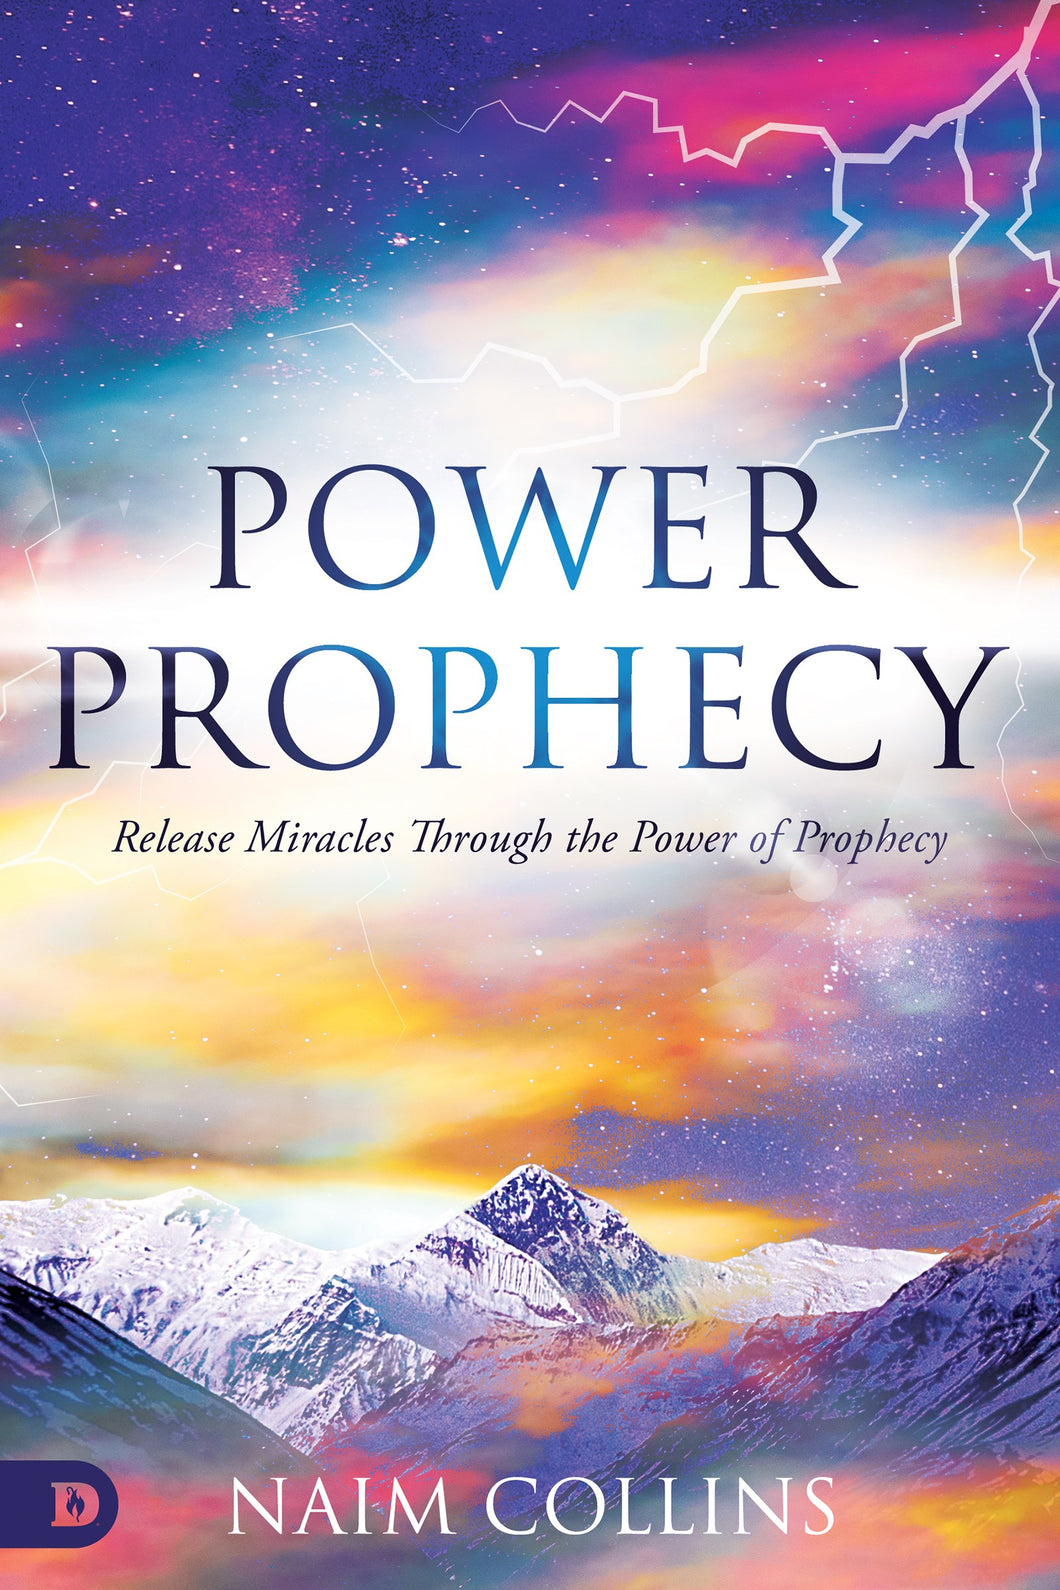 Power Prophecy